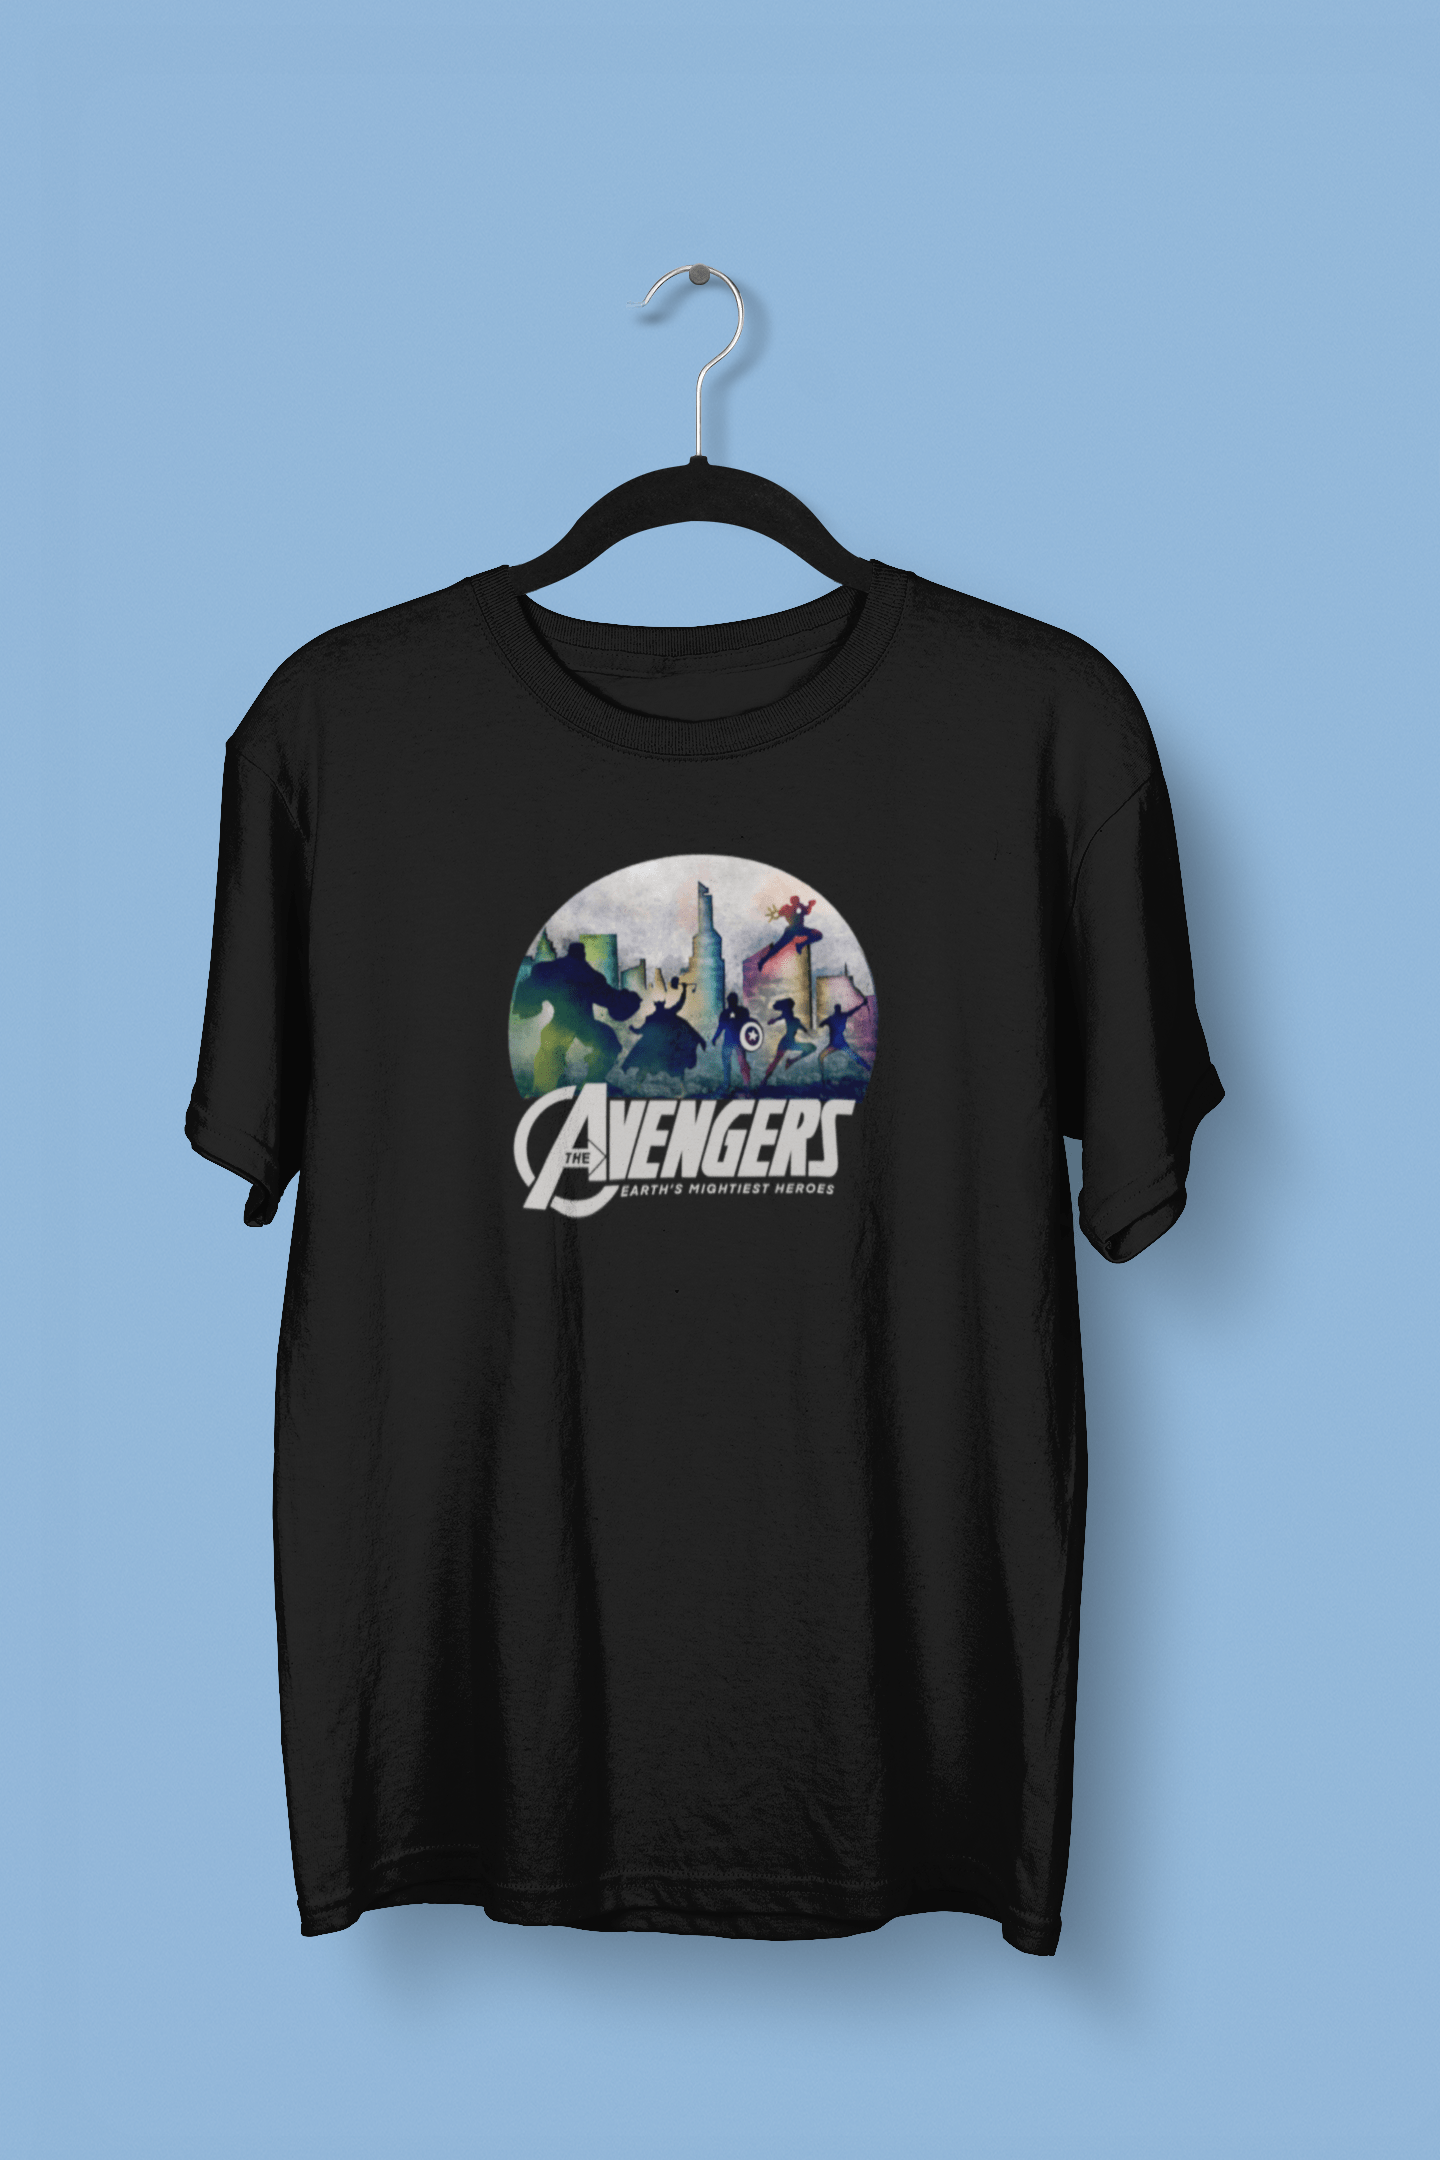 Avengers - Earth's Mightiest Heroes - Half Sleeves T-Shirts.